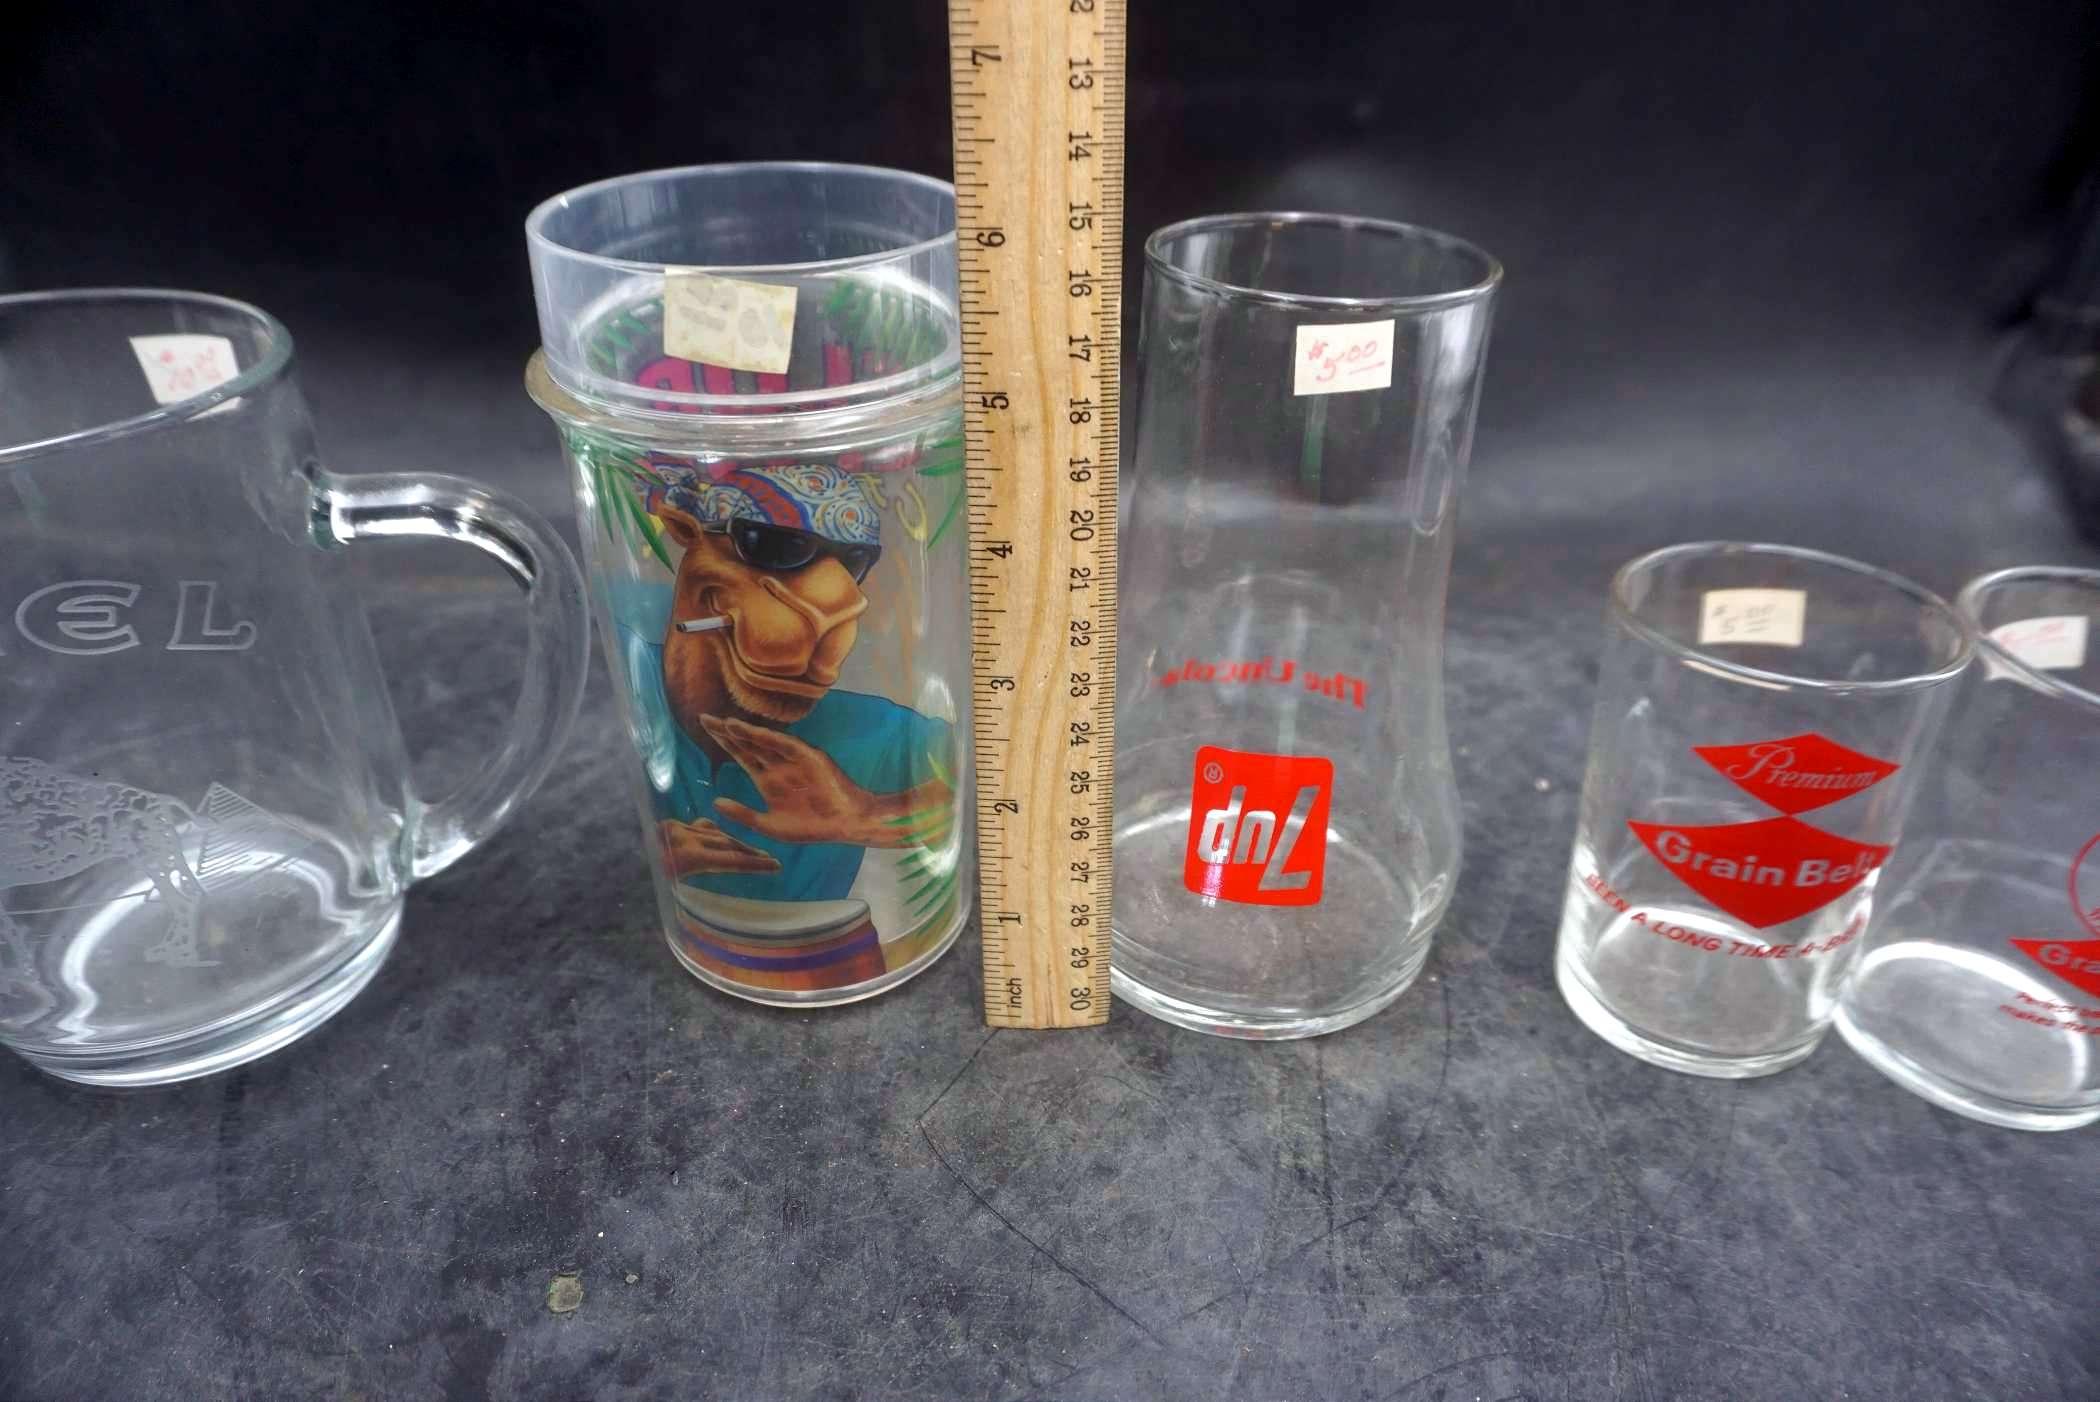 Candle Holders, Glasses & Mugs - Camel, 7Up,  Grain Belt